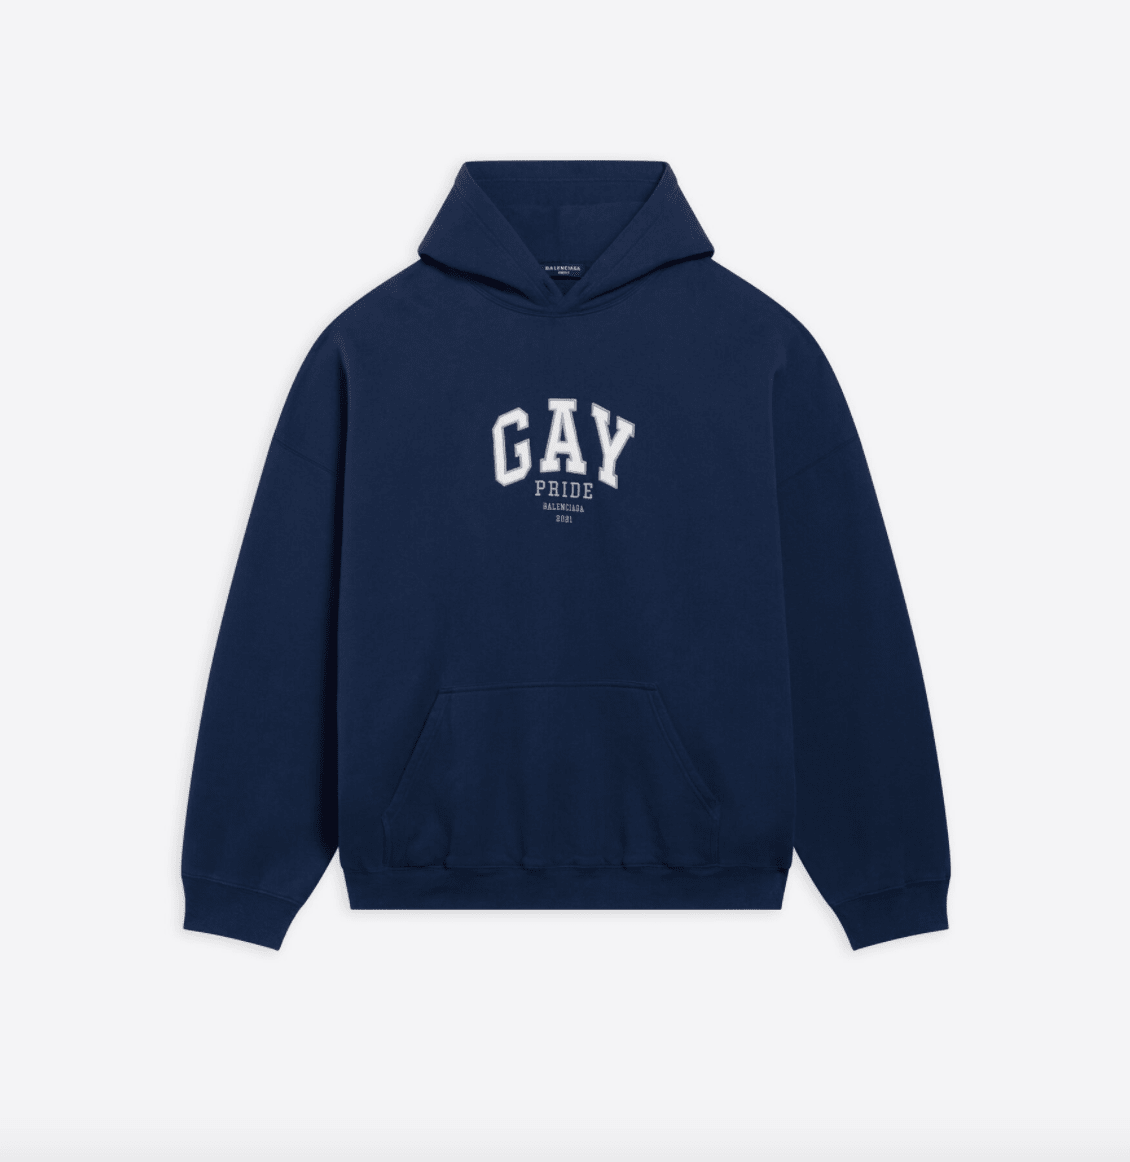 targets gay pride clothing